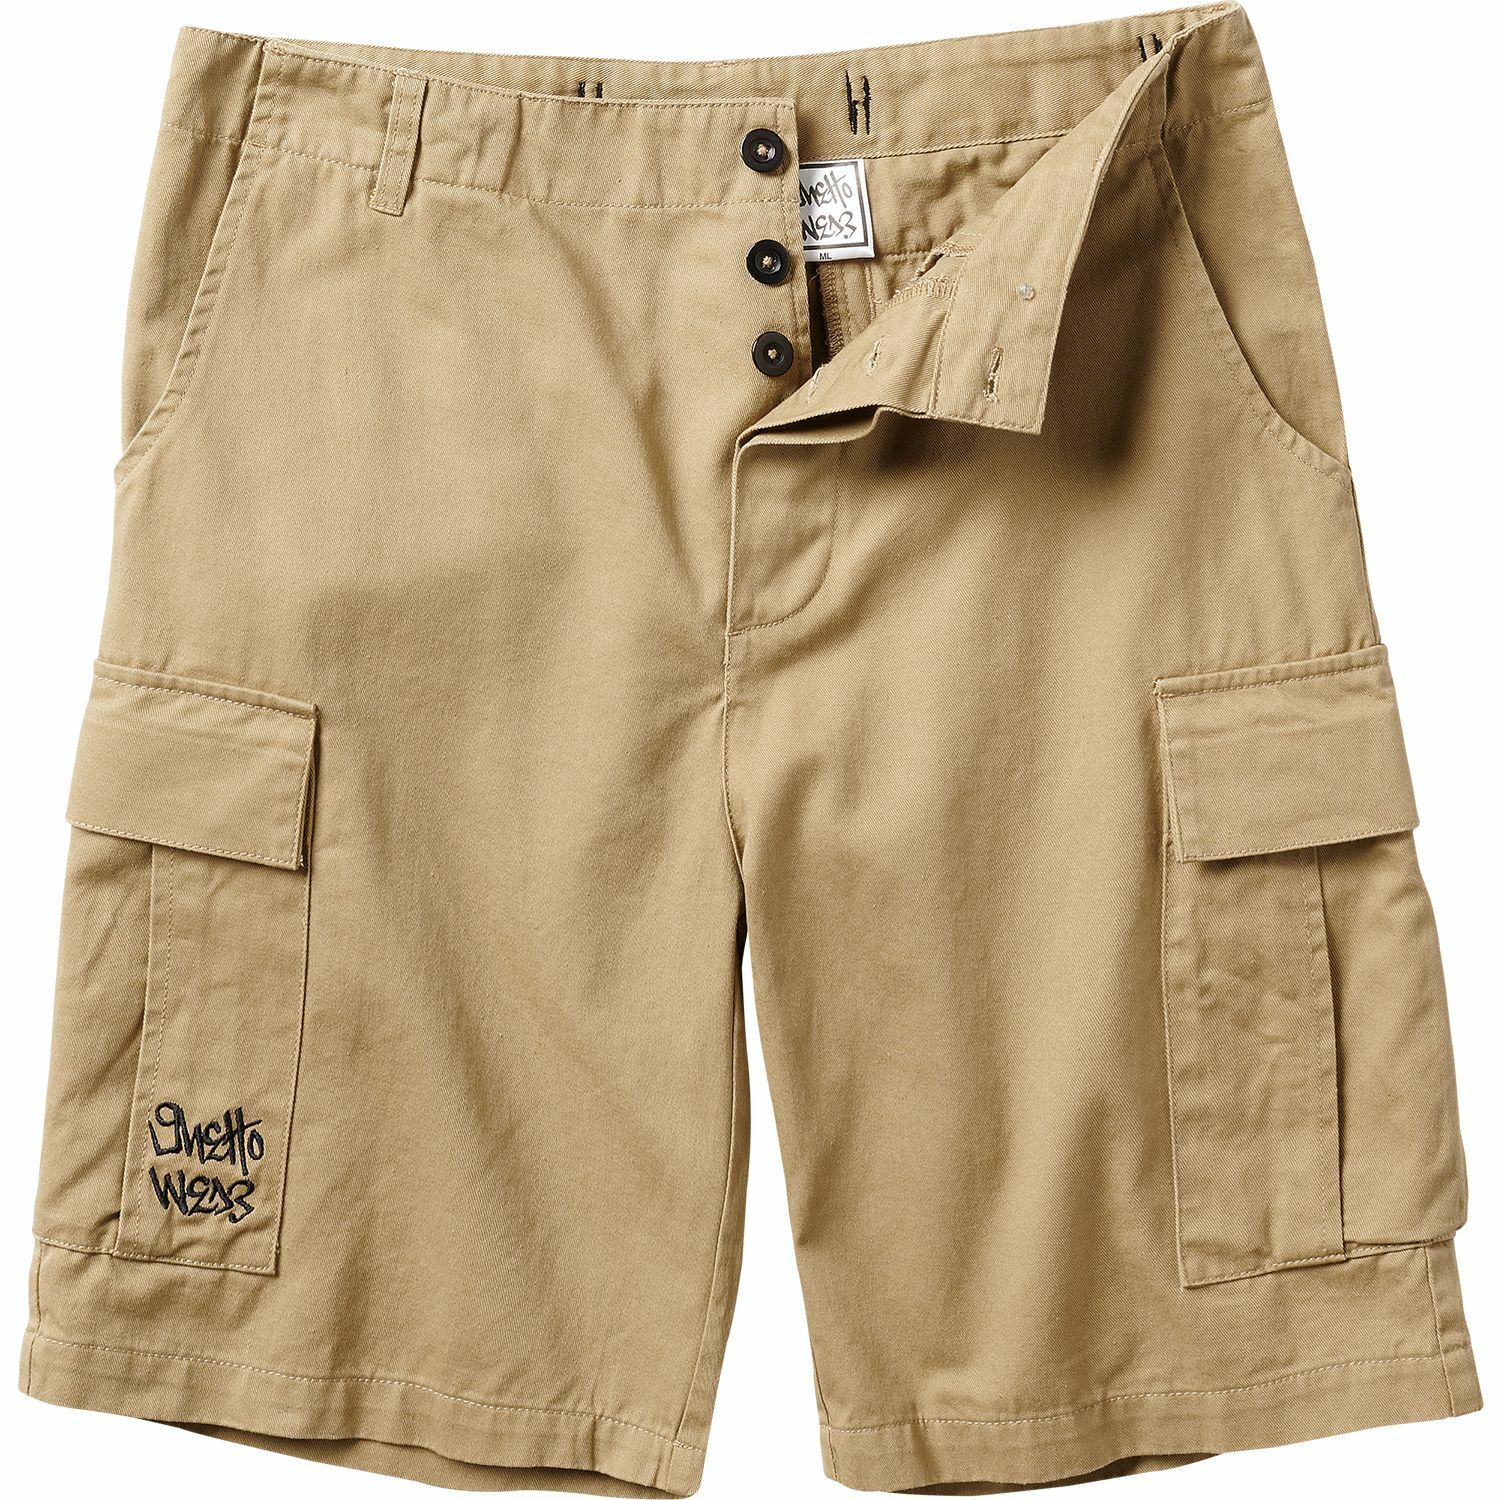 Ghetto Wear Cargo Shorts - Khaki